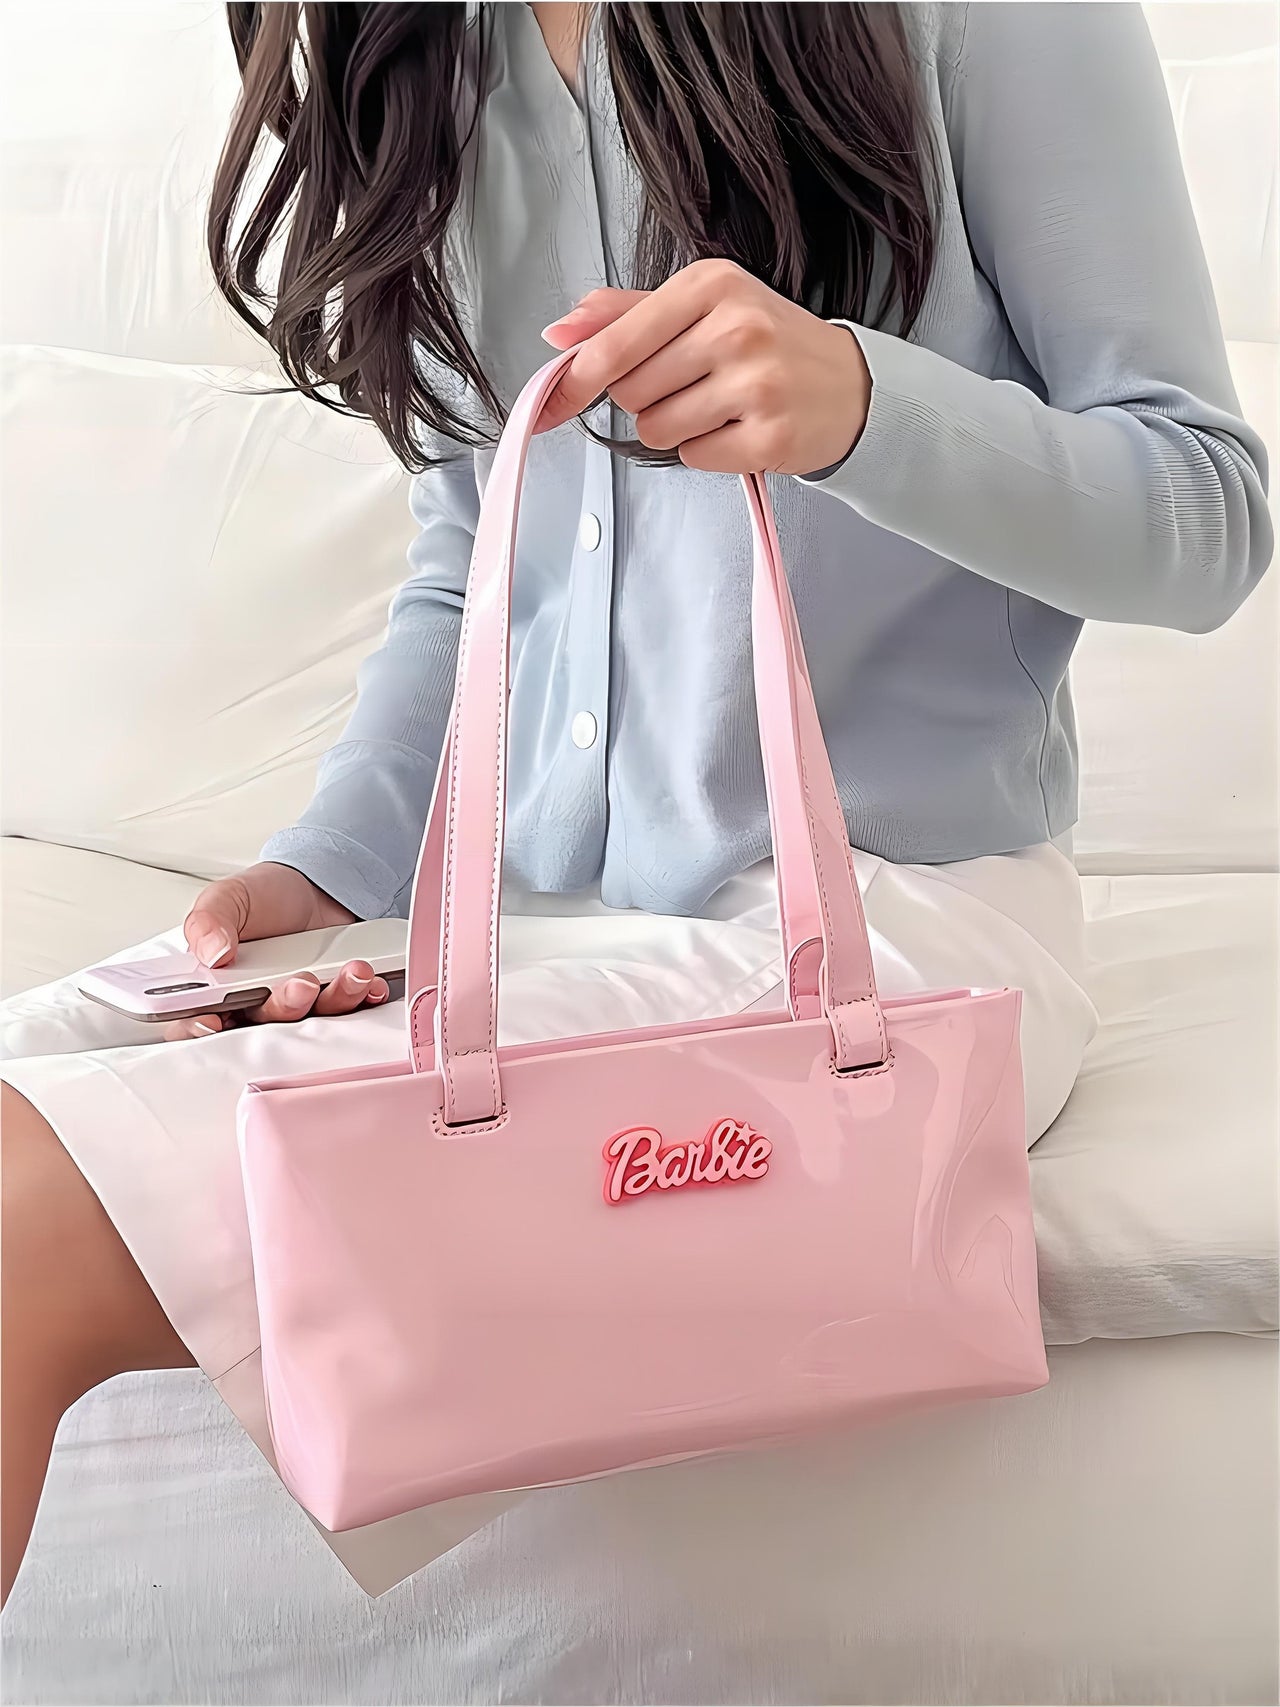 claire's barbie purse - Google Search | Handbag, Purses, Barbie accessories